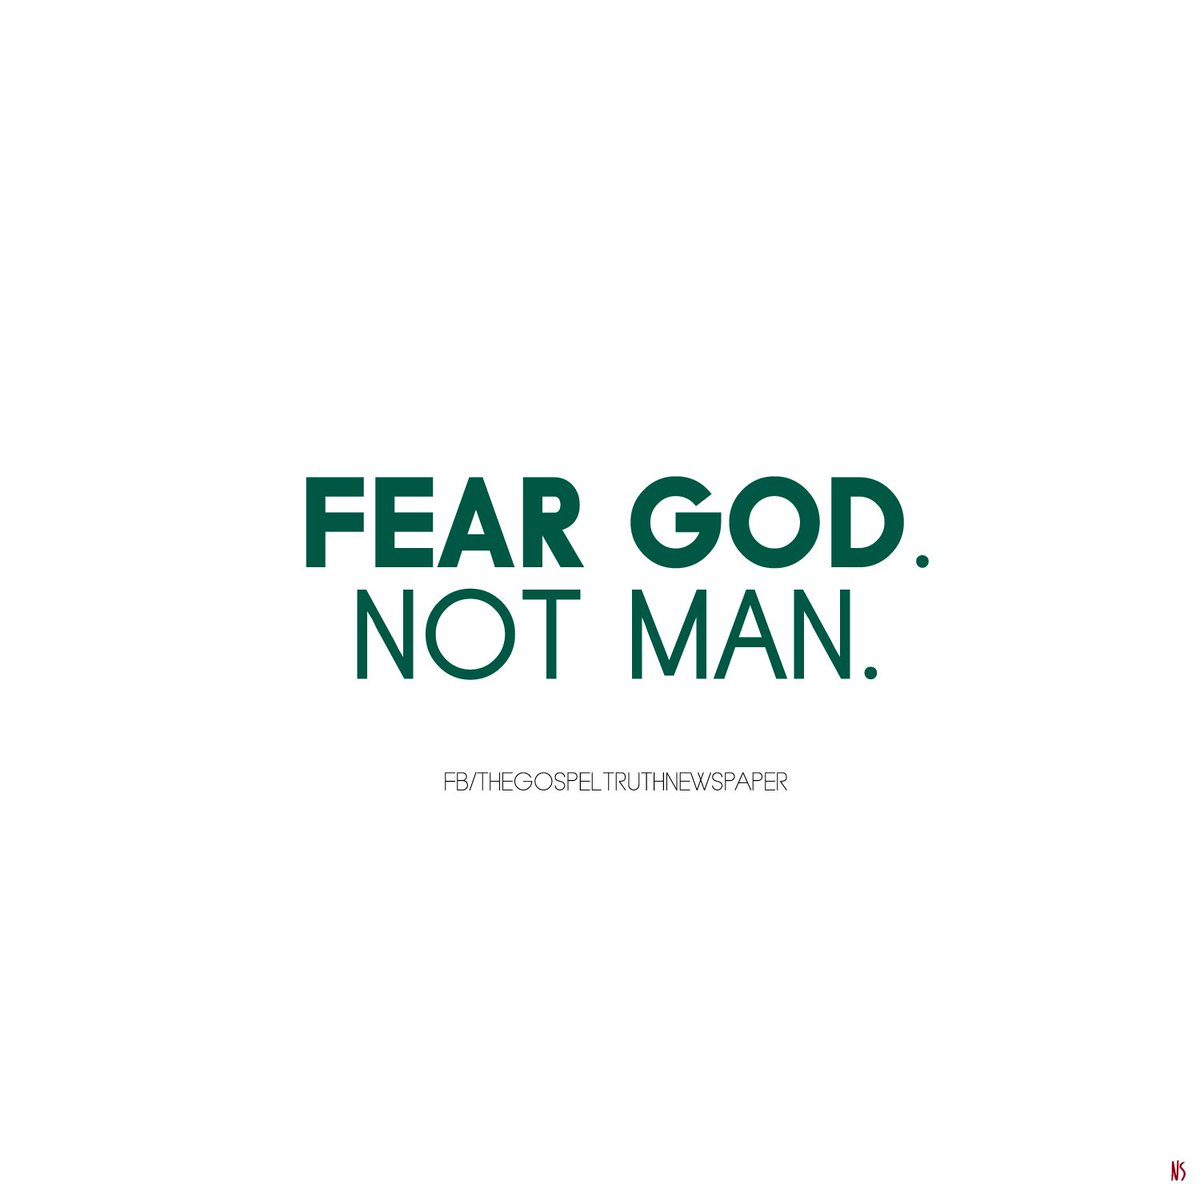 The Gospel Truth On Twitter: "Fear God. Not Man. #Christian #Quote #Inspiration #Fear #Dontfear #God #Minimalism Https://T.co/Okz4Zipehn" / Twitter